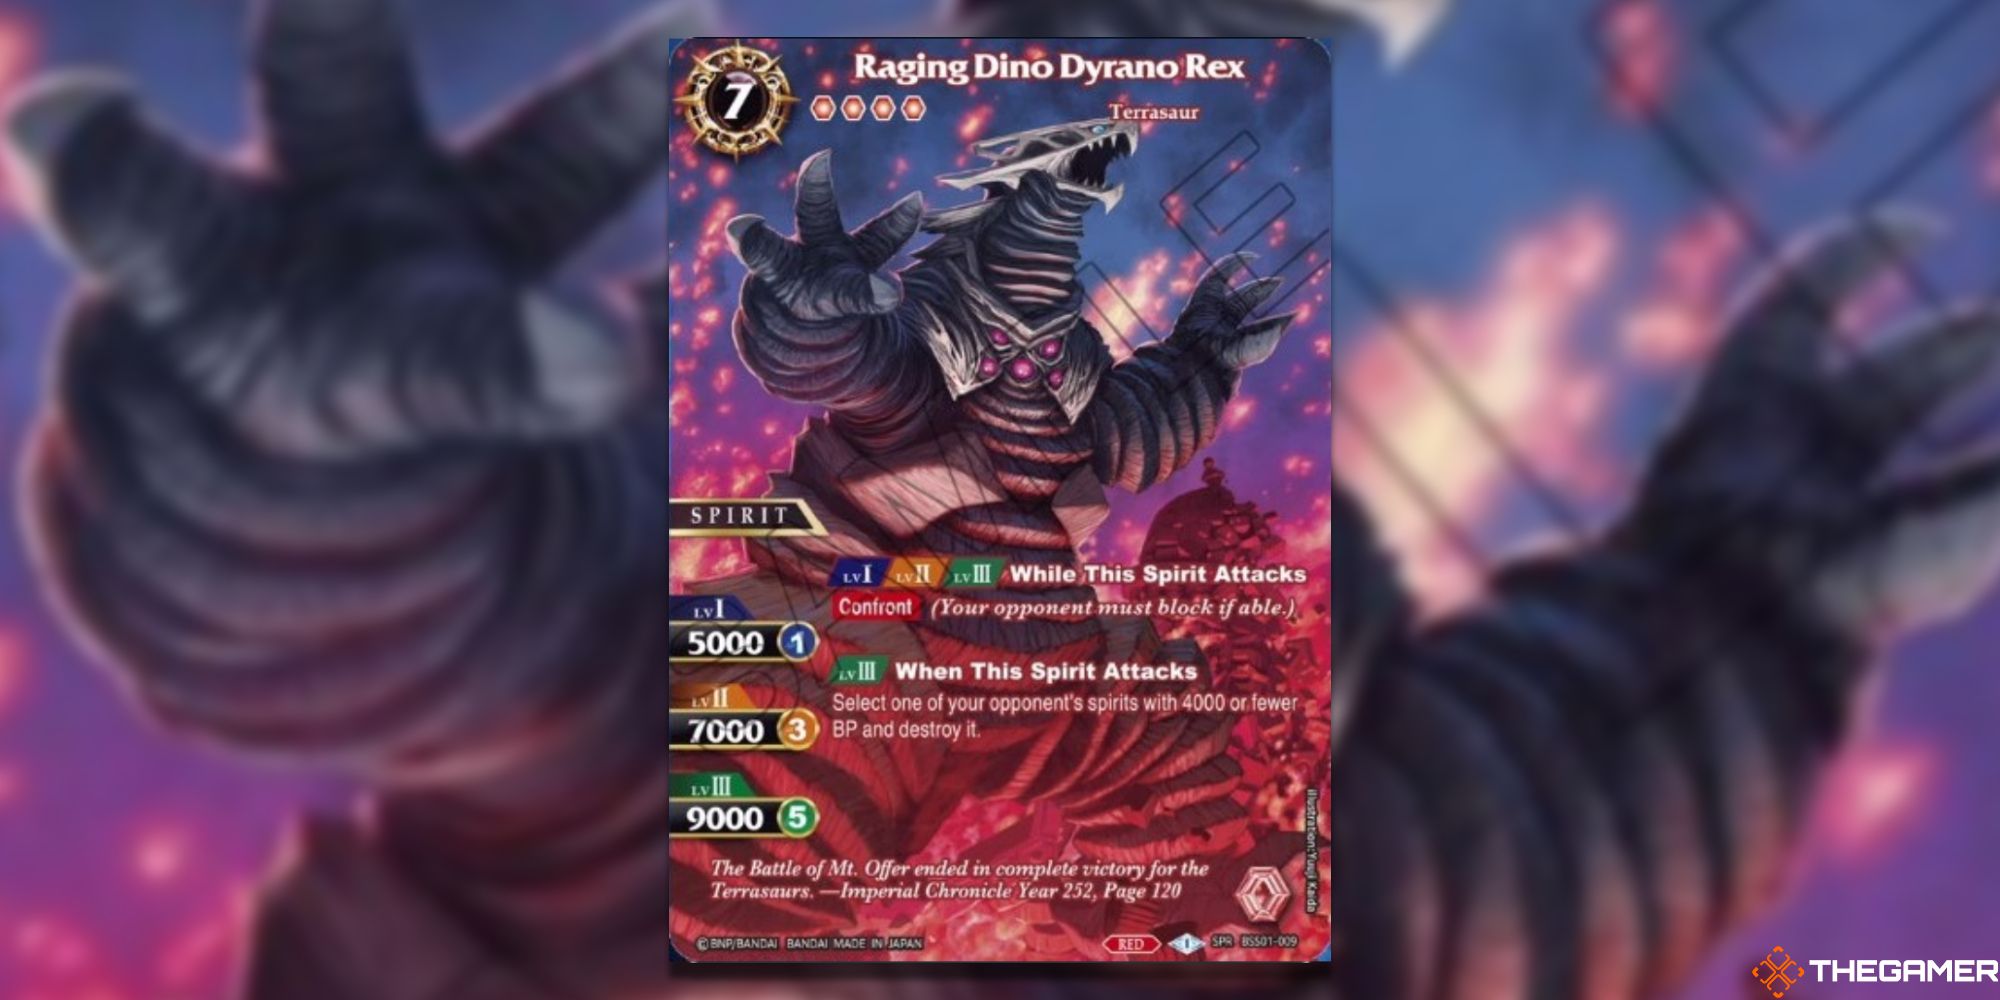 Raging Dino Dyrano Rex card from Battle Spirits Saga